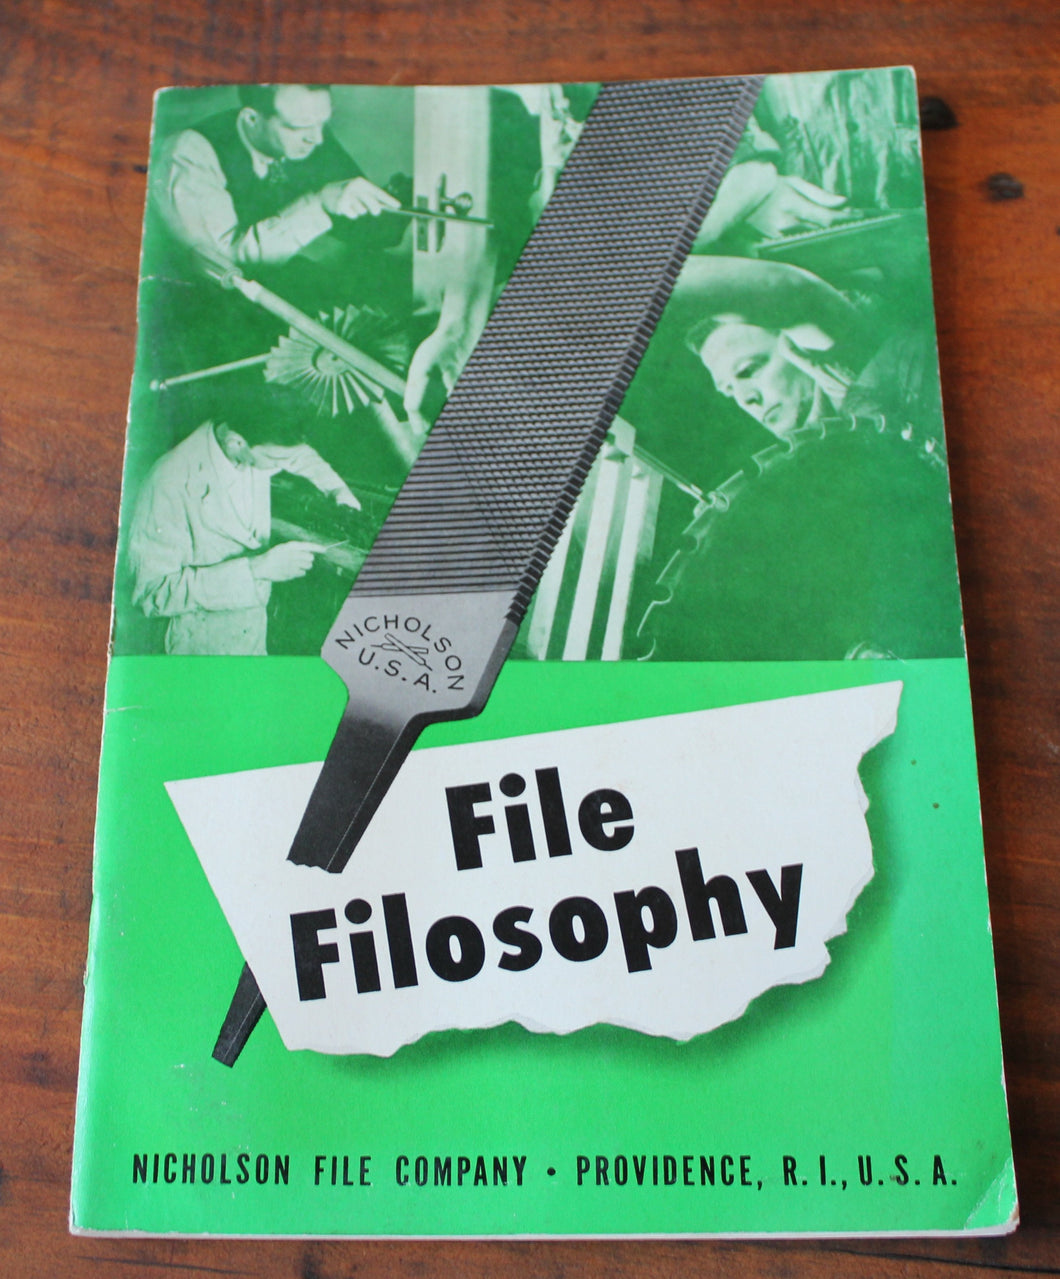 Vintage & Original Nicholson “File Filosophy